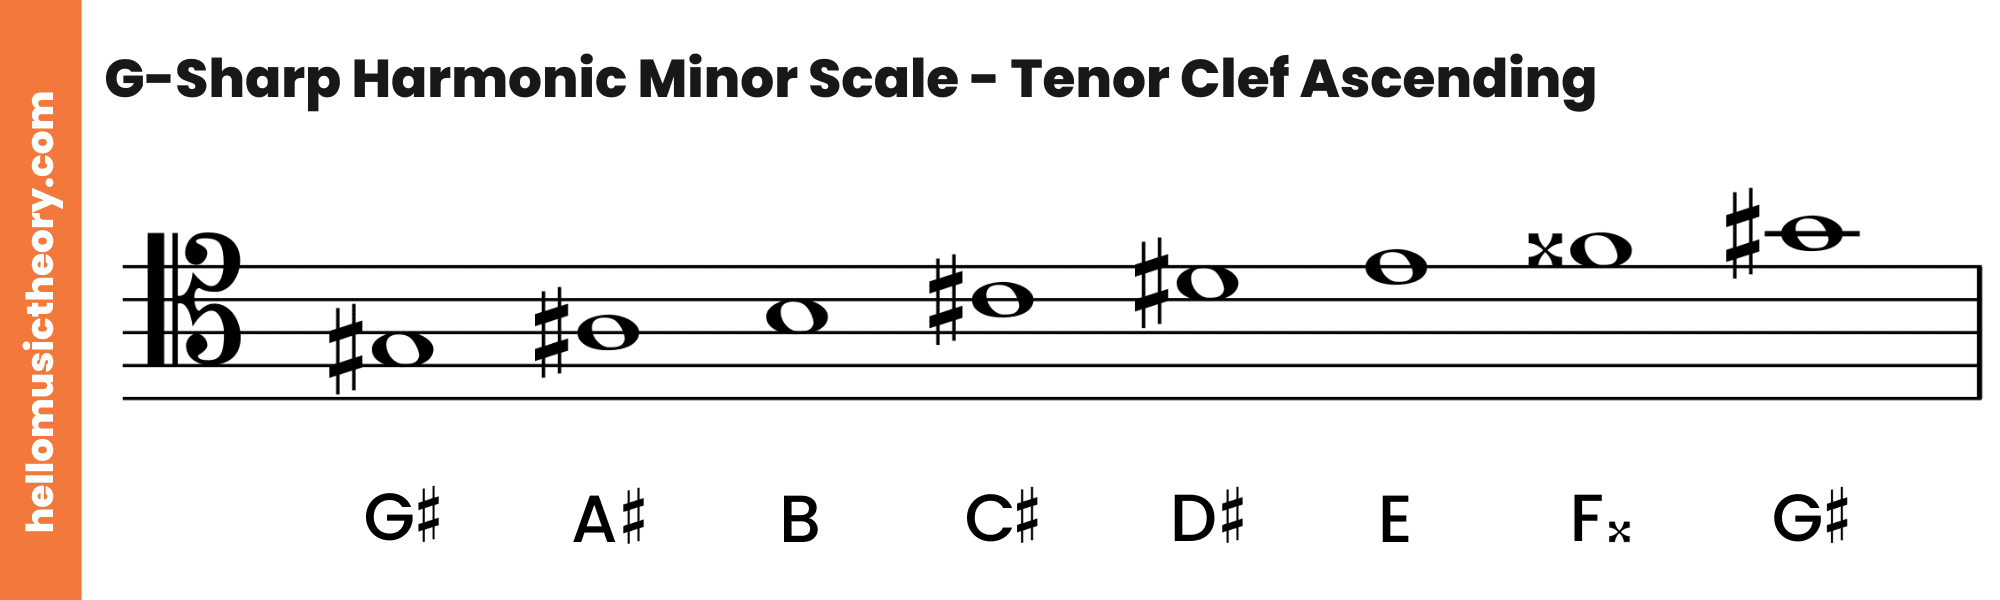 G-Sharp Harmonic Minor Scale Tenor Clef Ascending